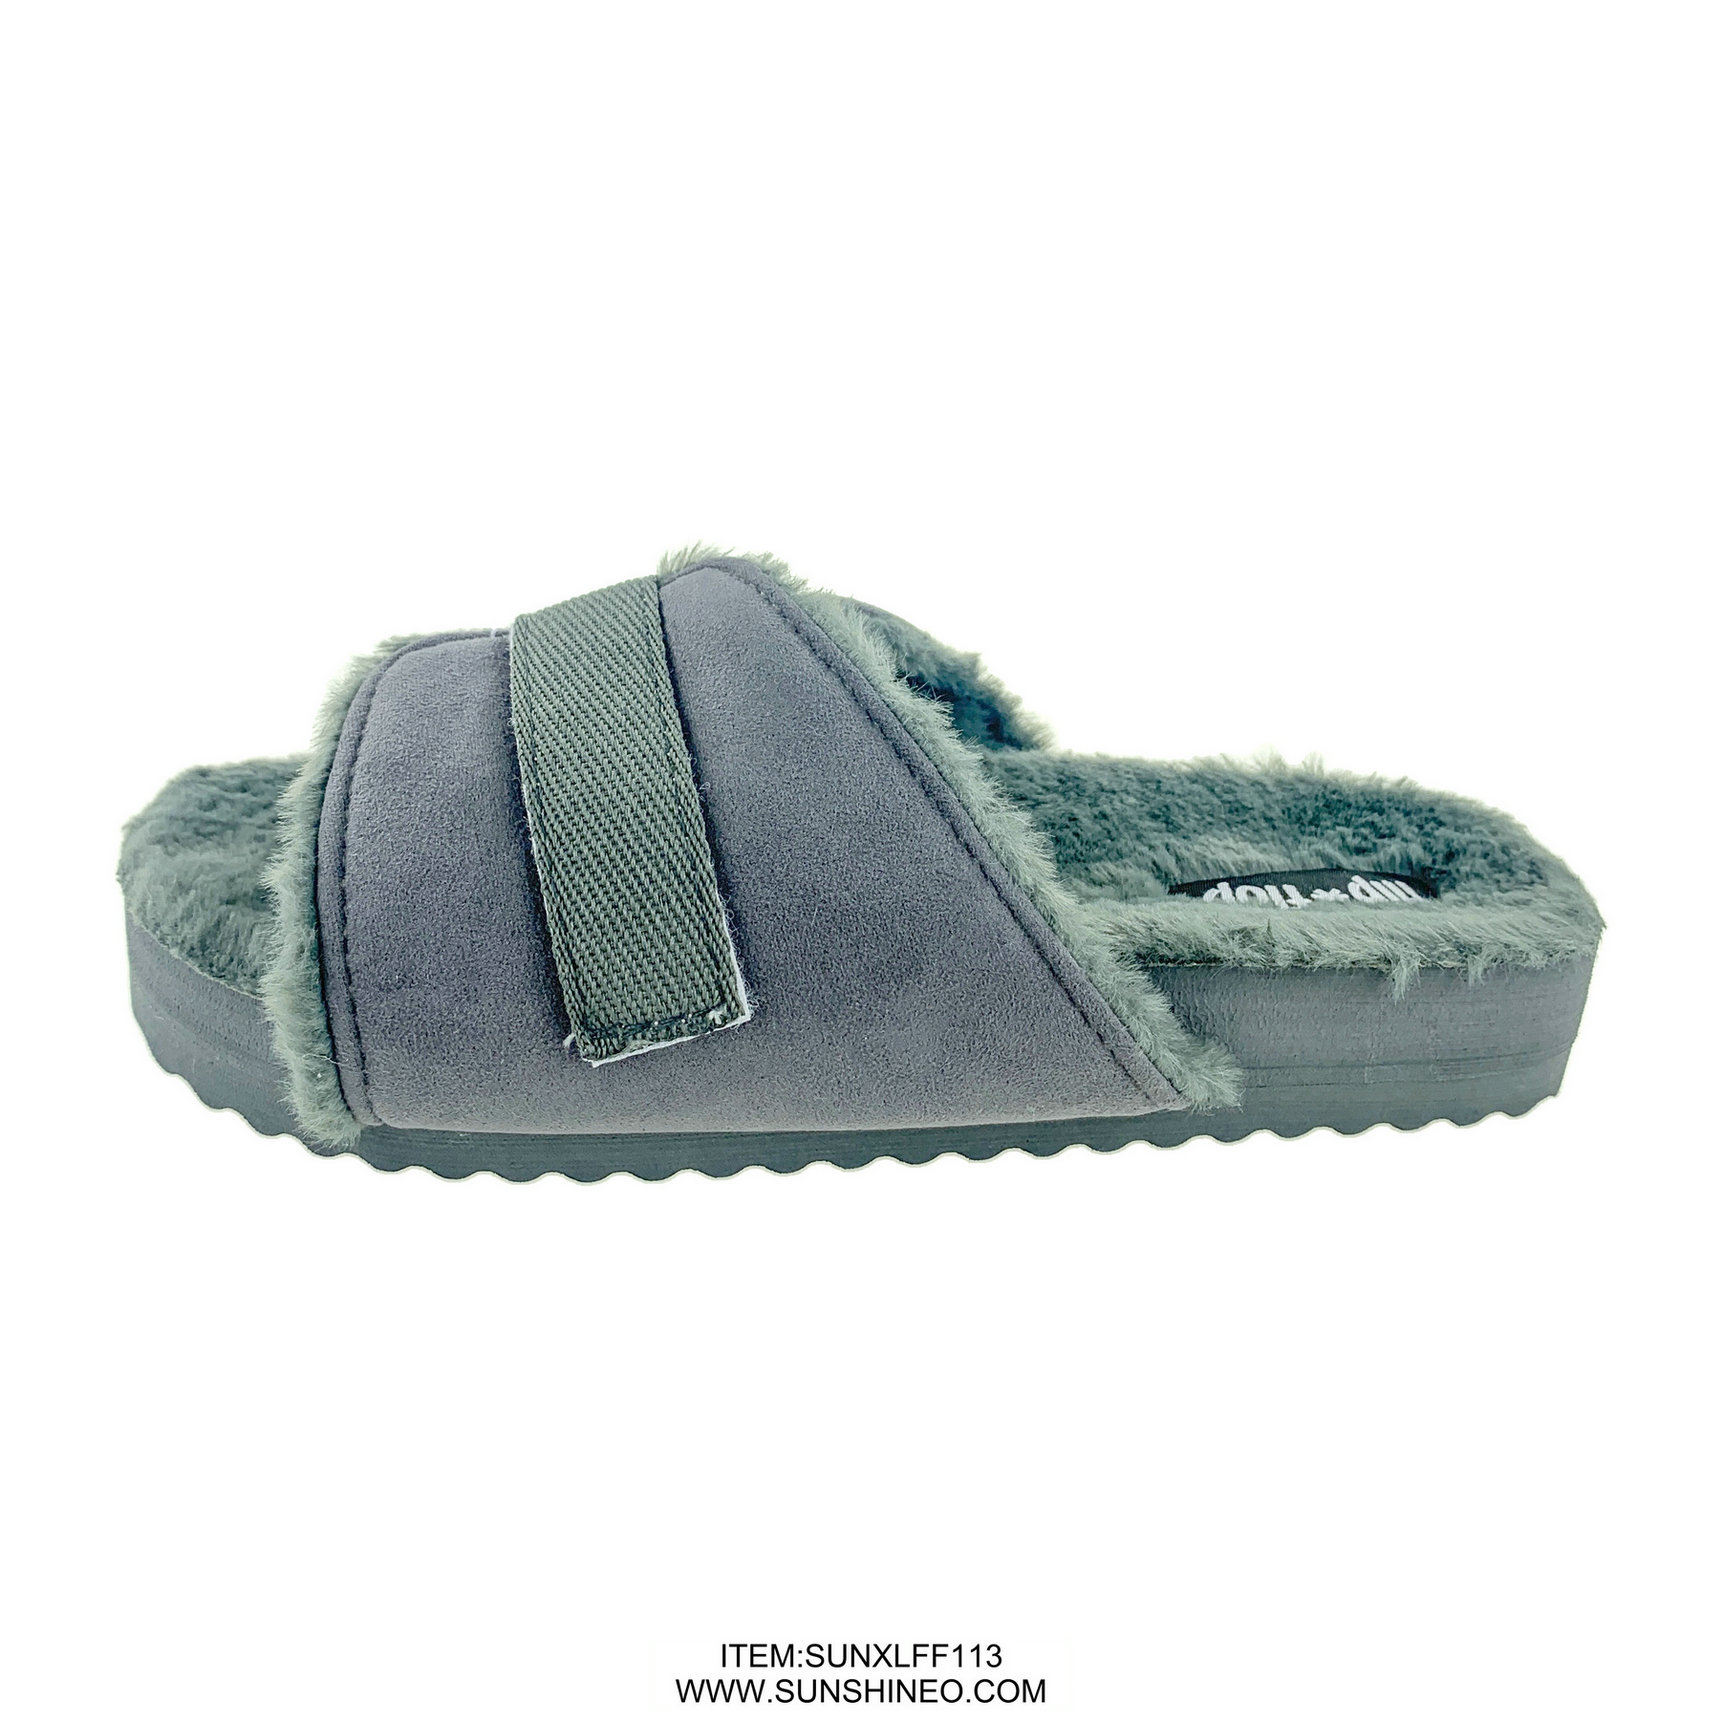 SUNXLFF113 fur flip flop sandals winter slippers